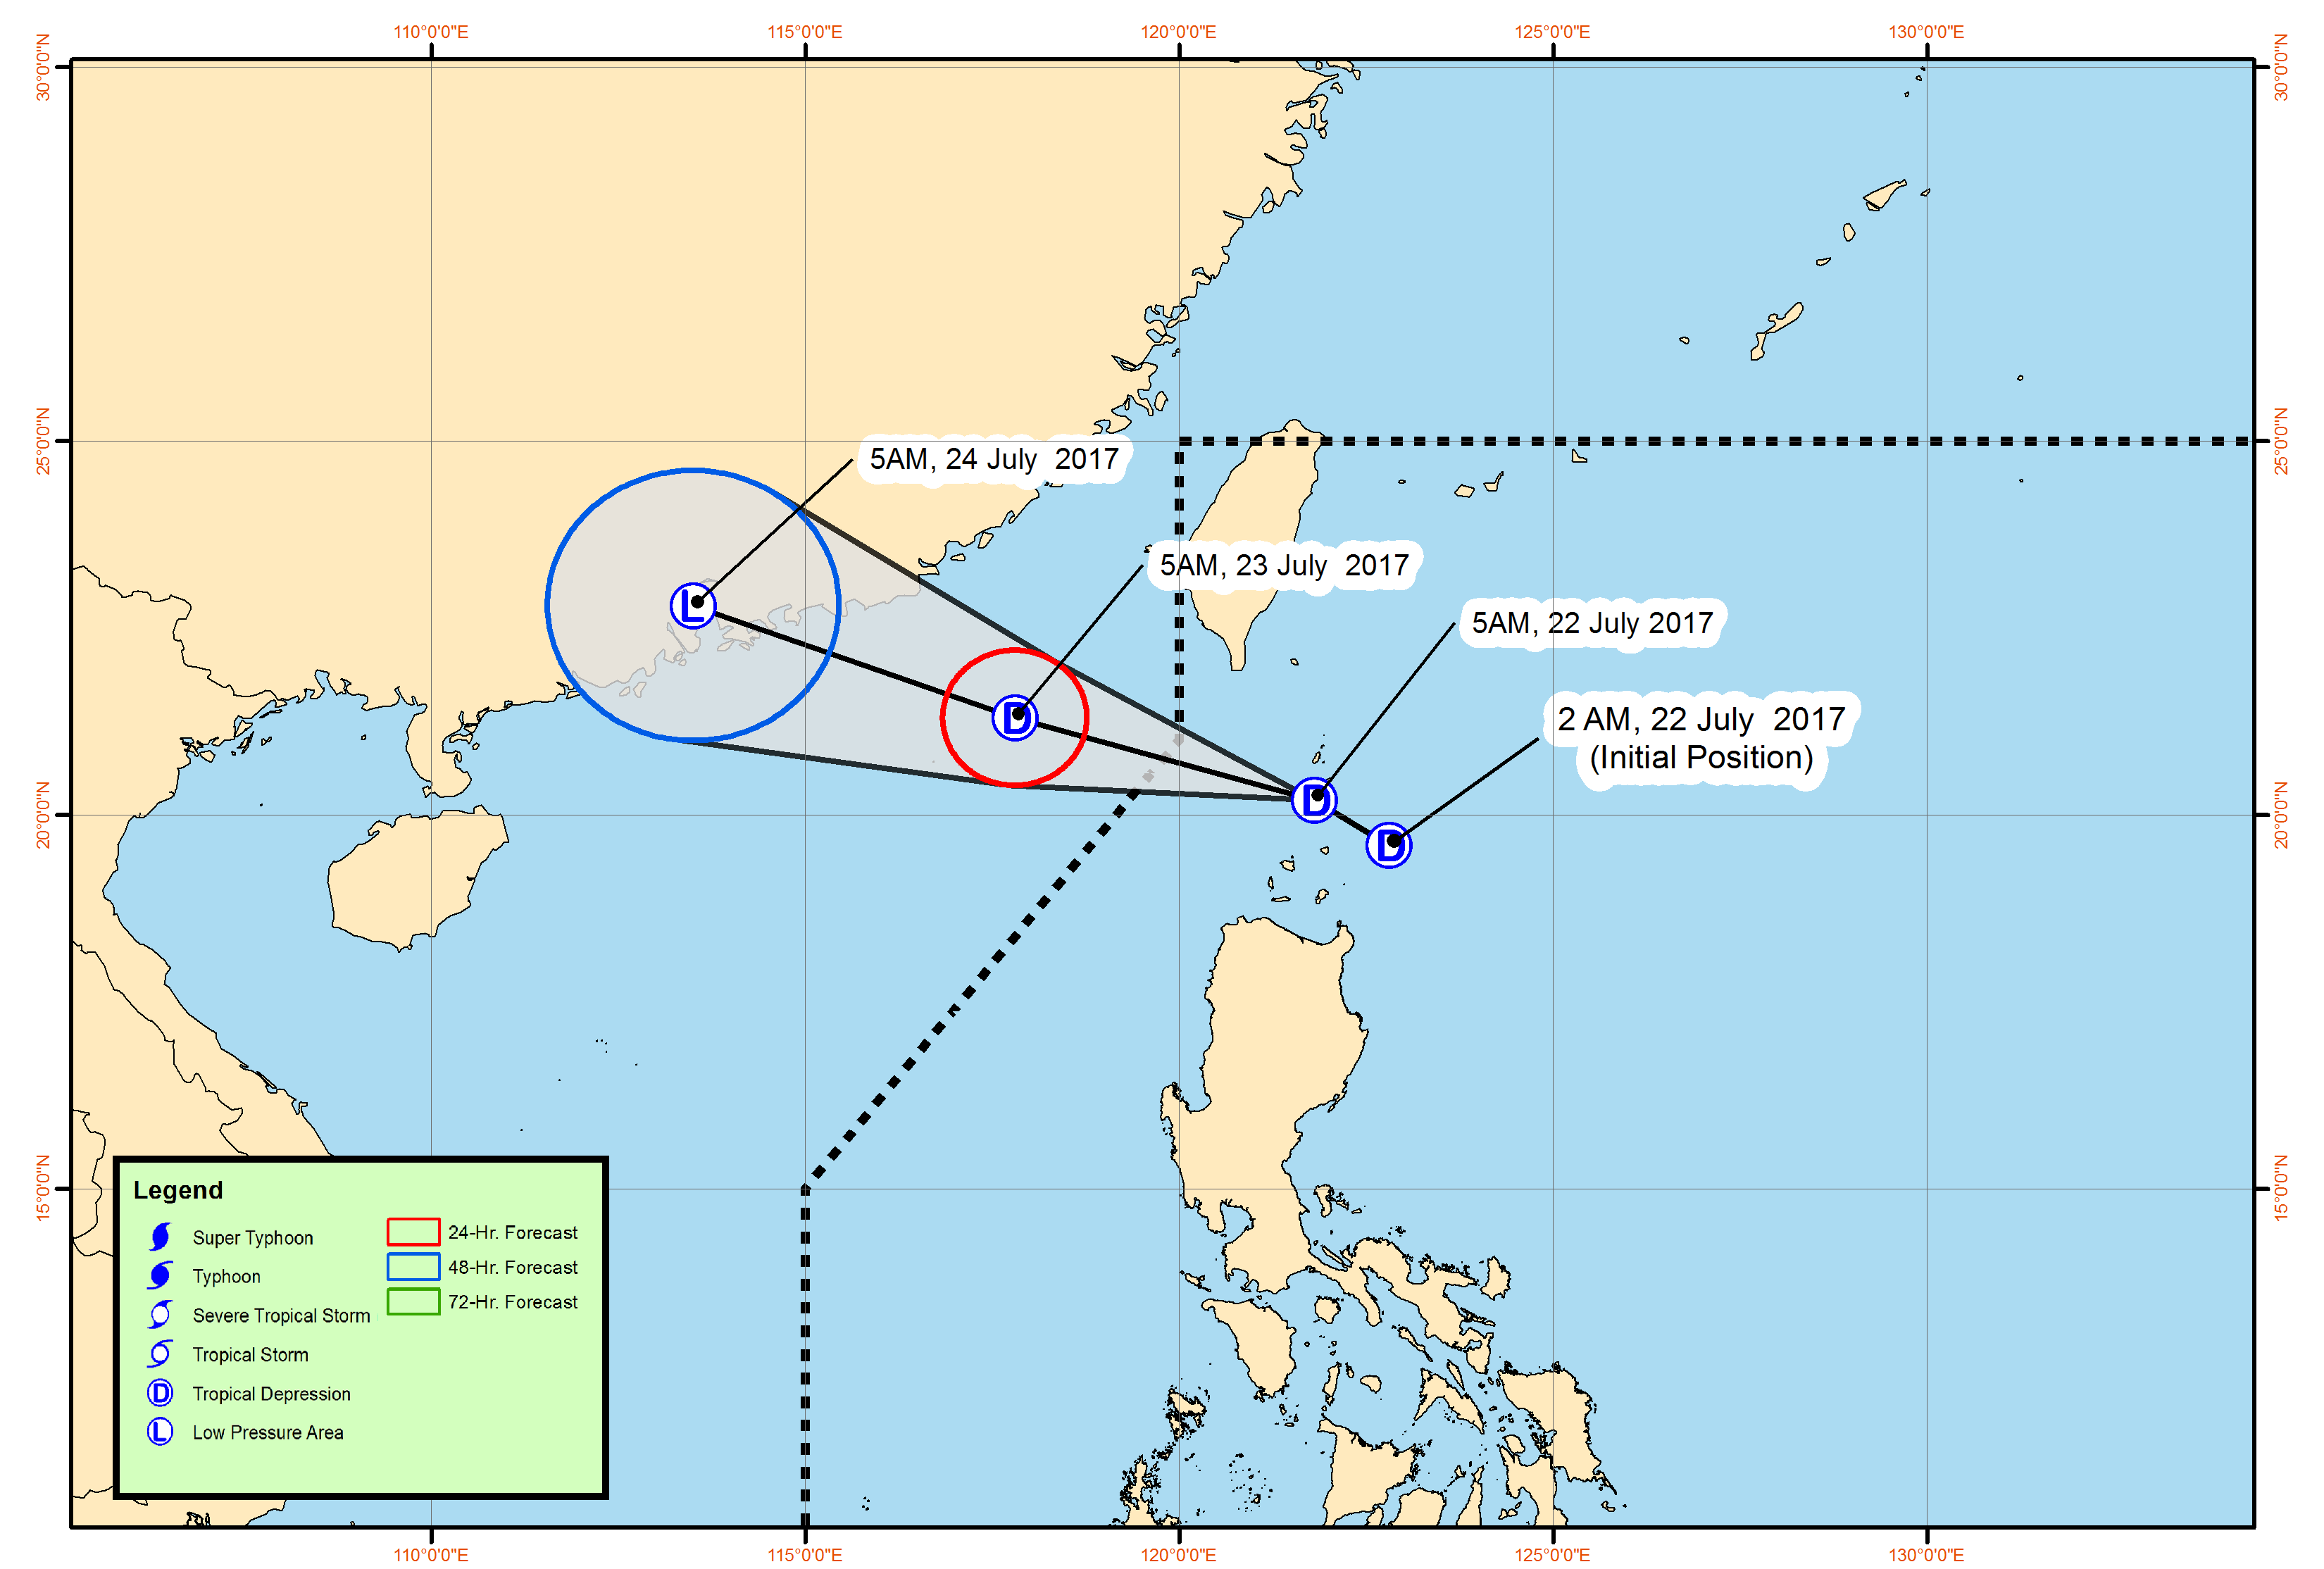 LPA off Luzon develops into tropical depression